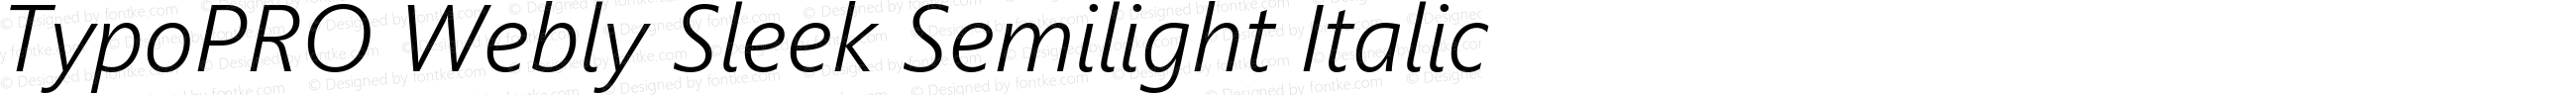 TypoPRO WeblySleek UI Semilight Italic